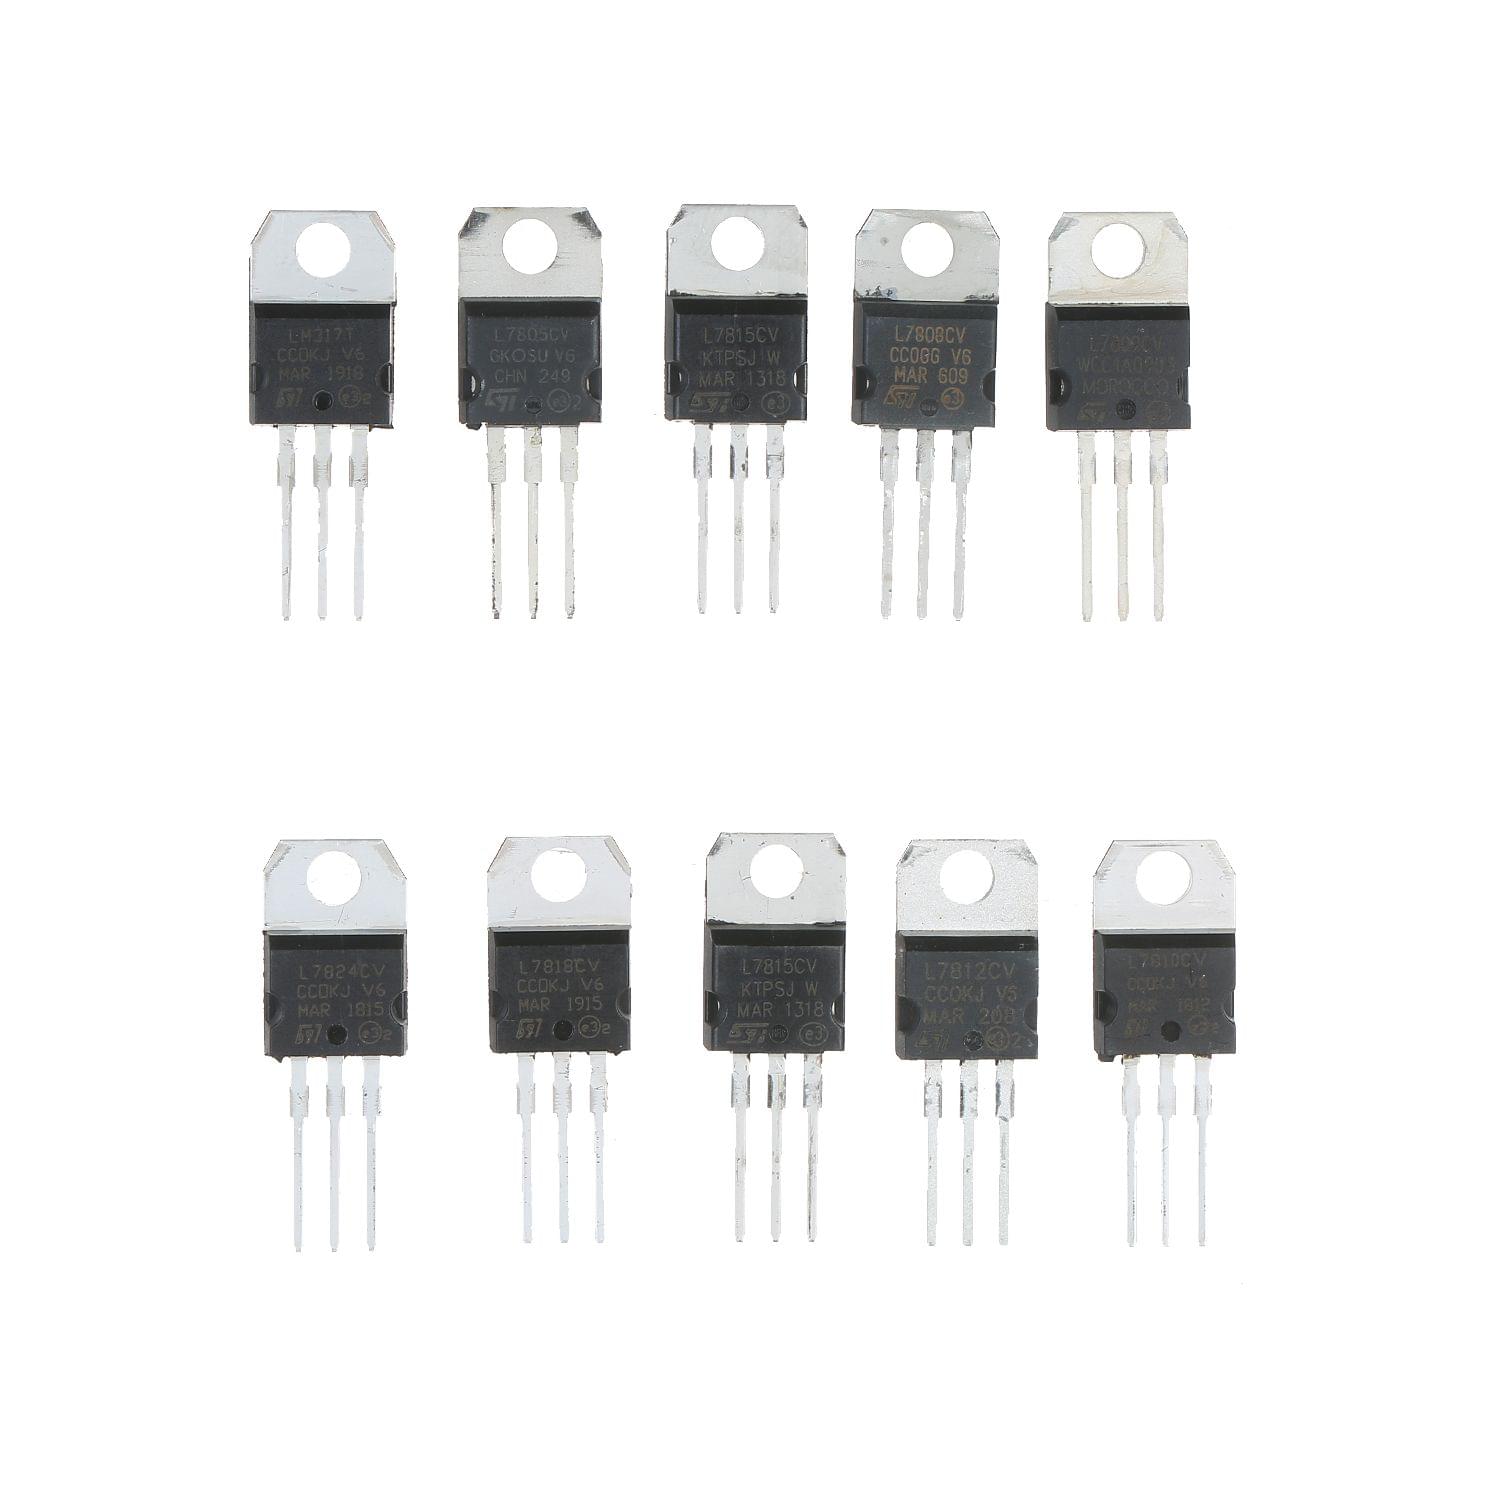 10 Values 50pcs Voltage Regulator Transistor Assortment Kit